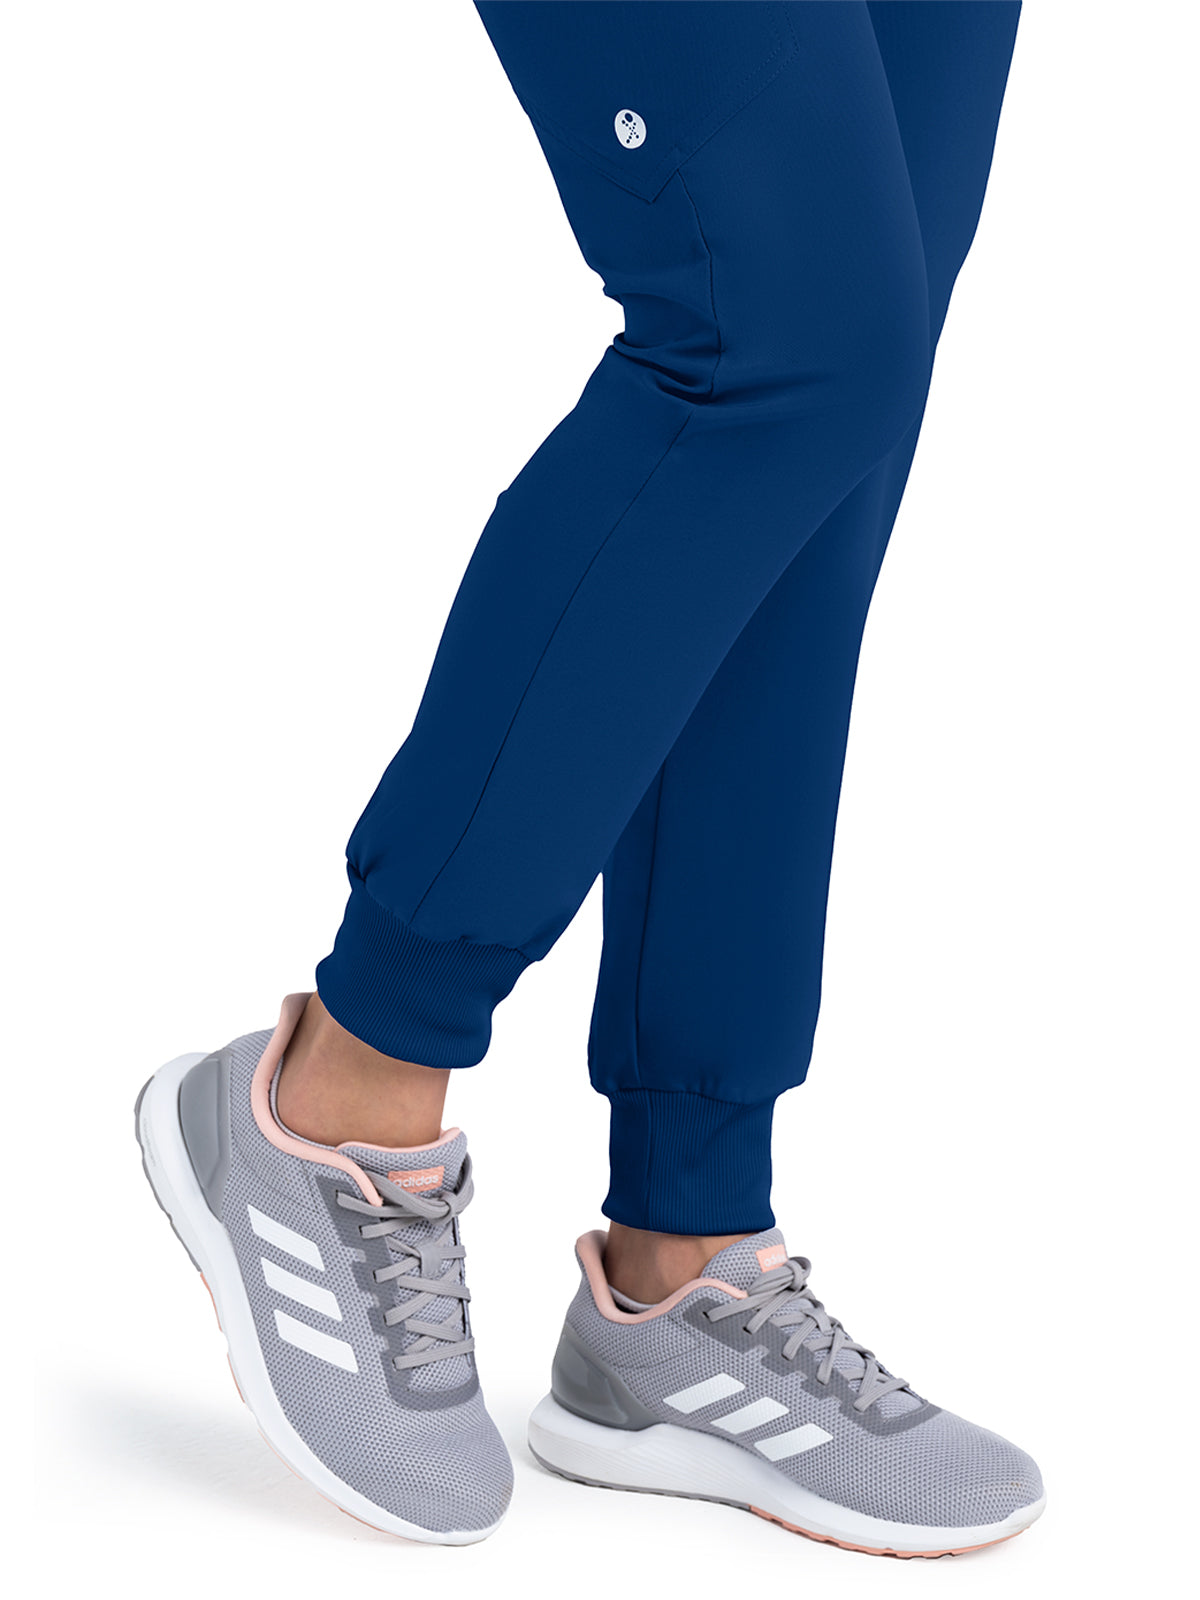 Women's Active Jogger Pant - 1529 - Navy Blue